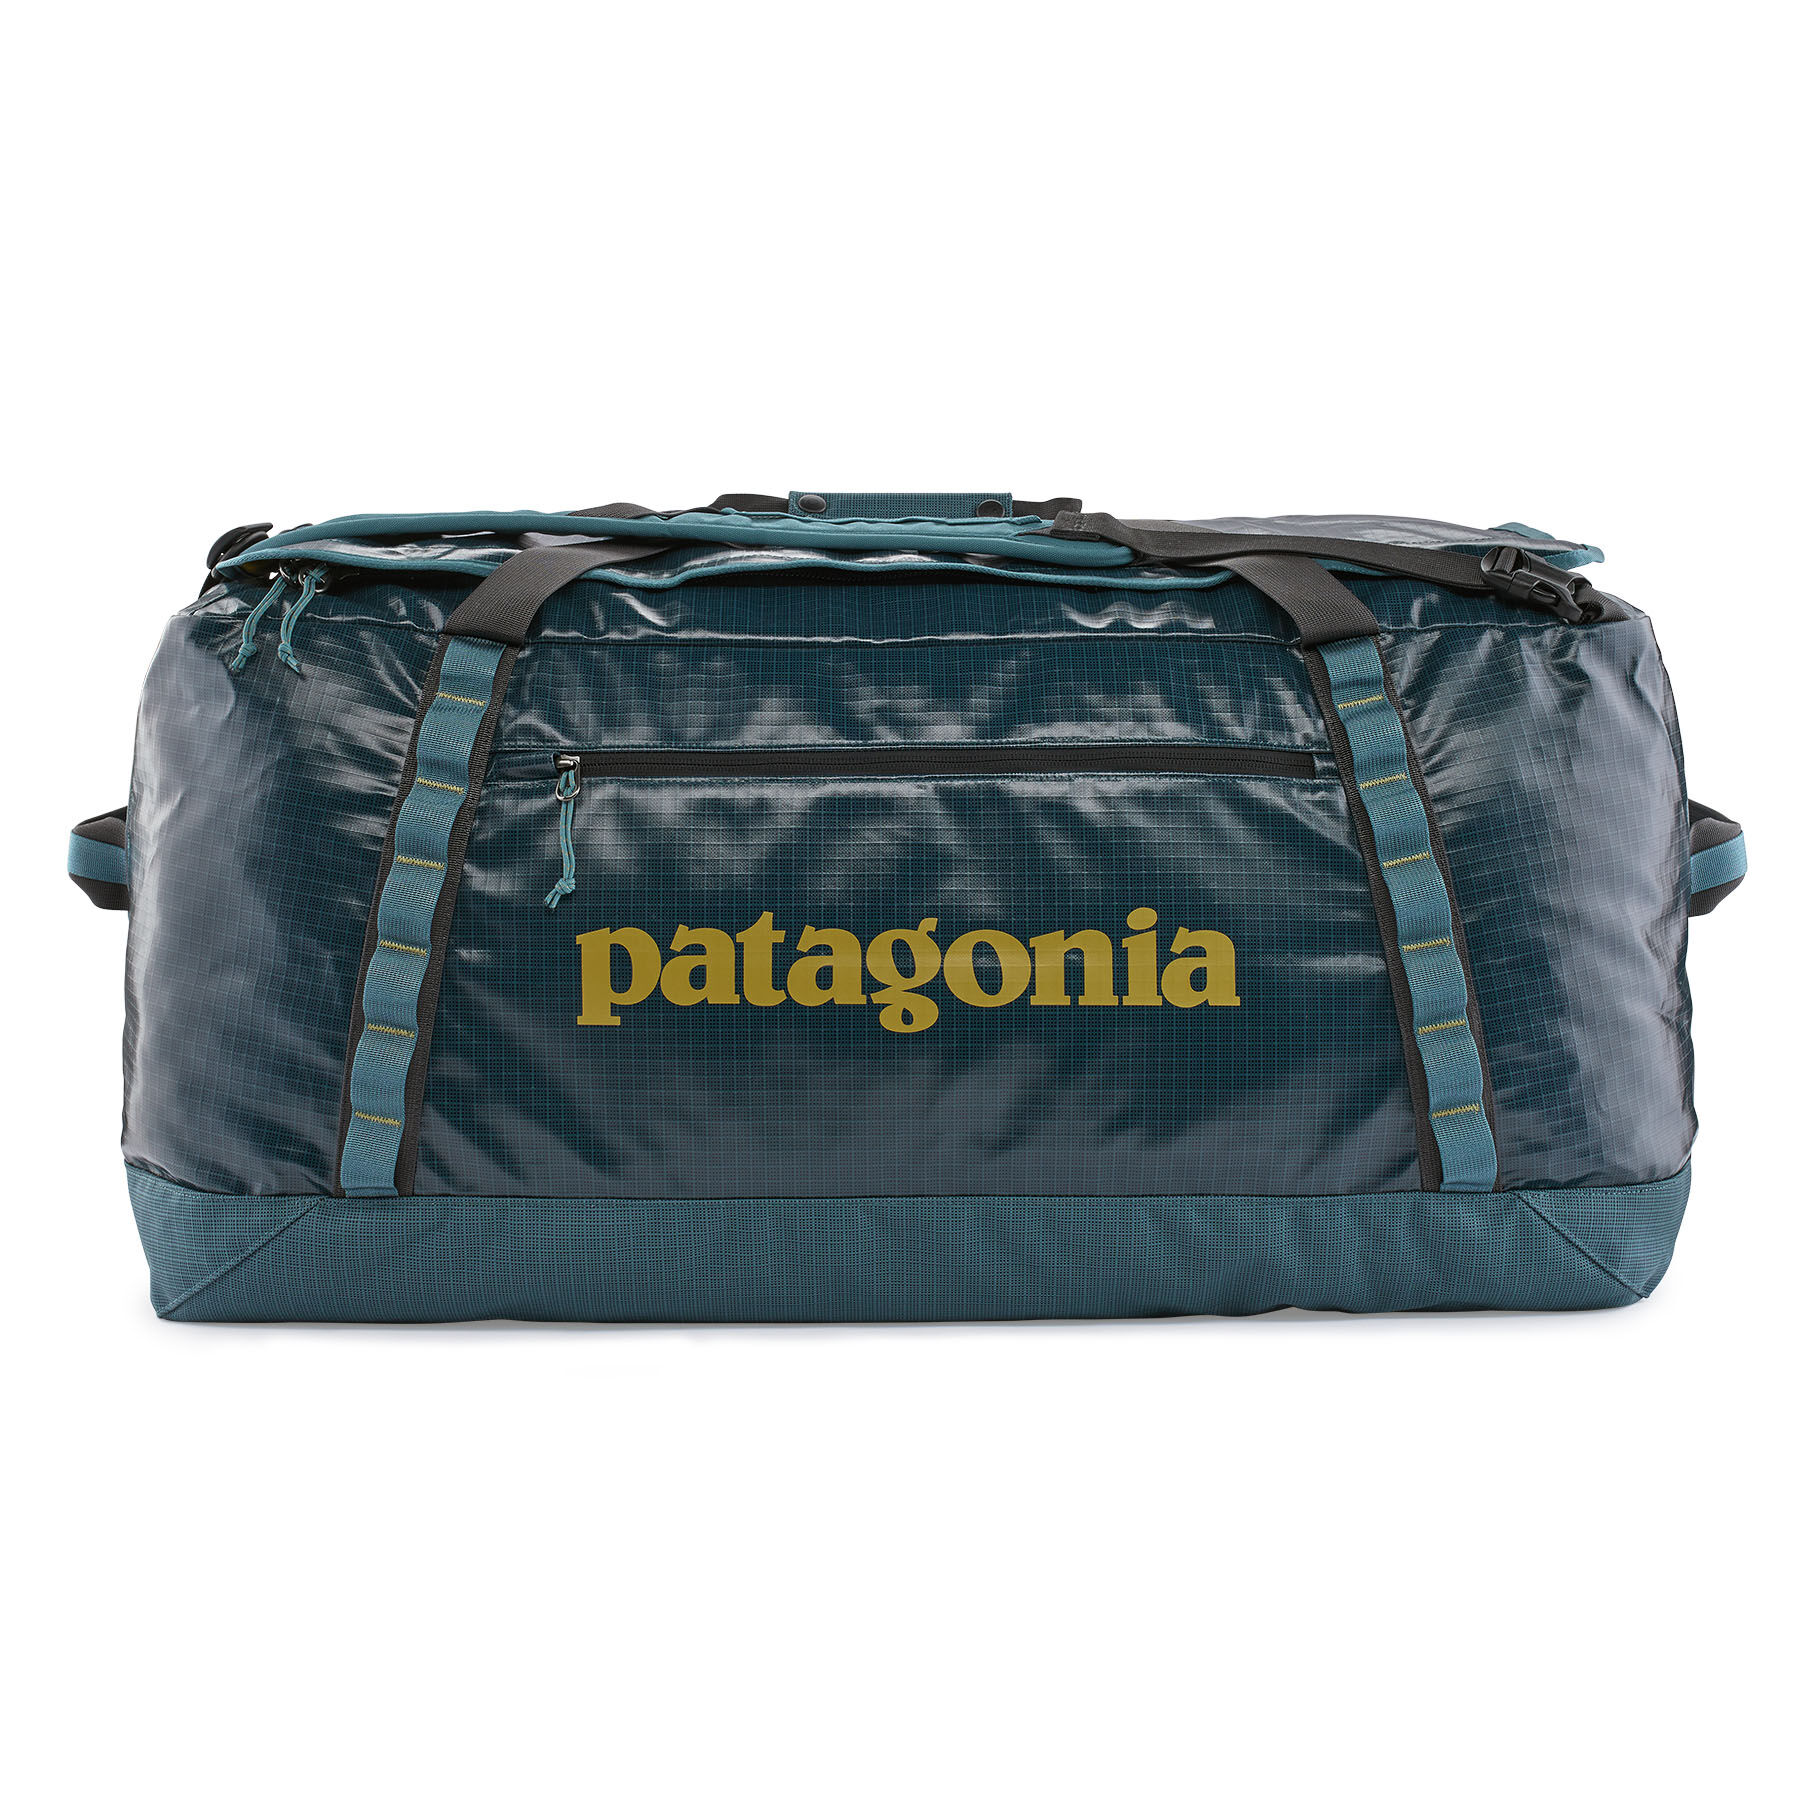 Patagonia Black Hole Duffel 100L - Luggage